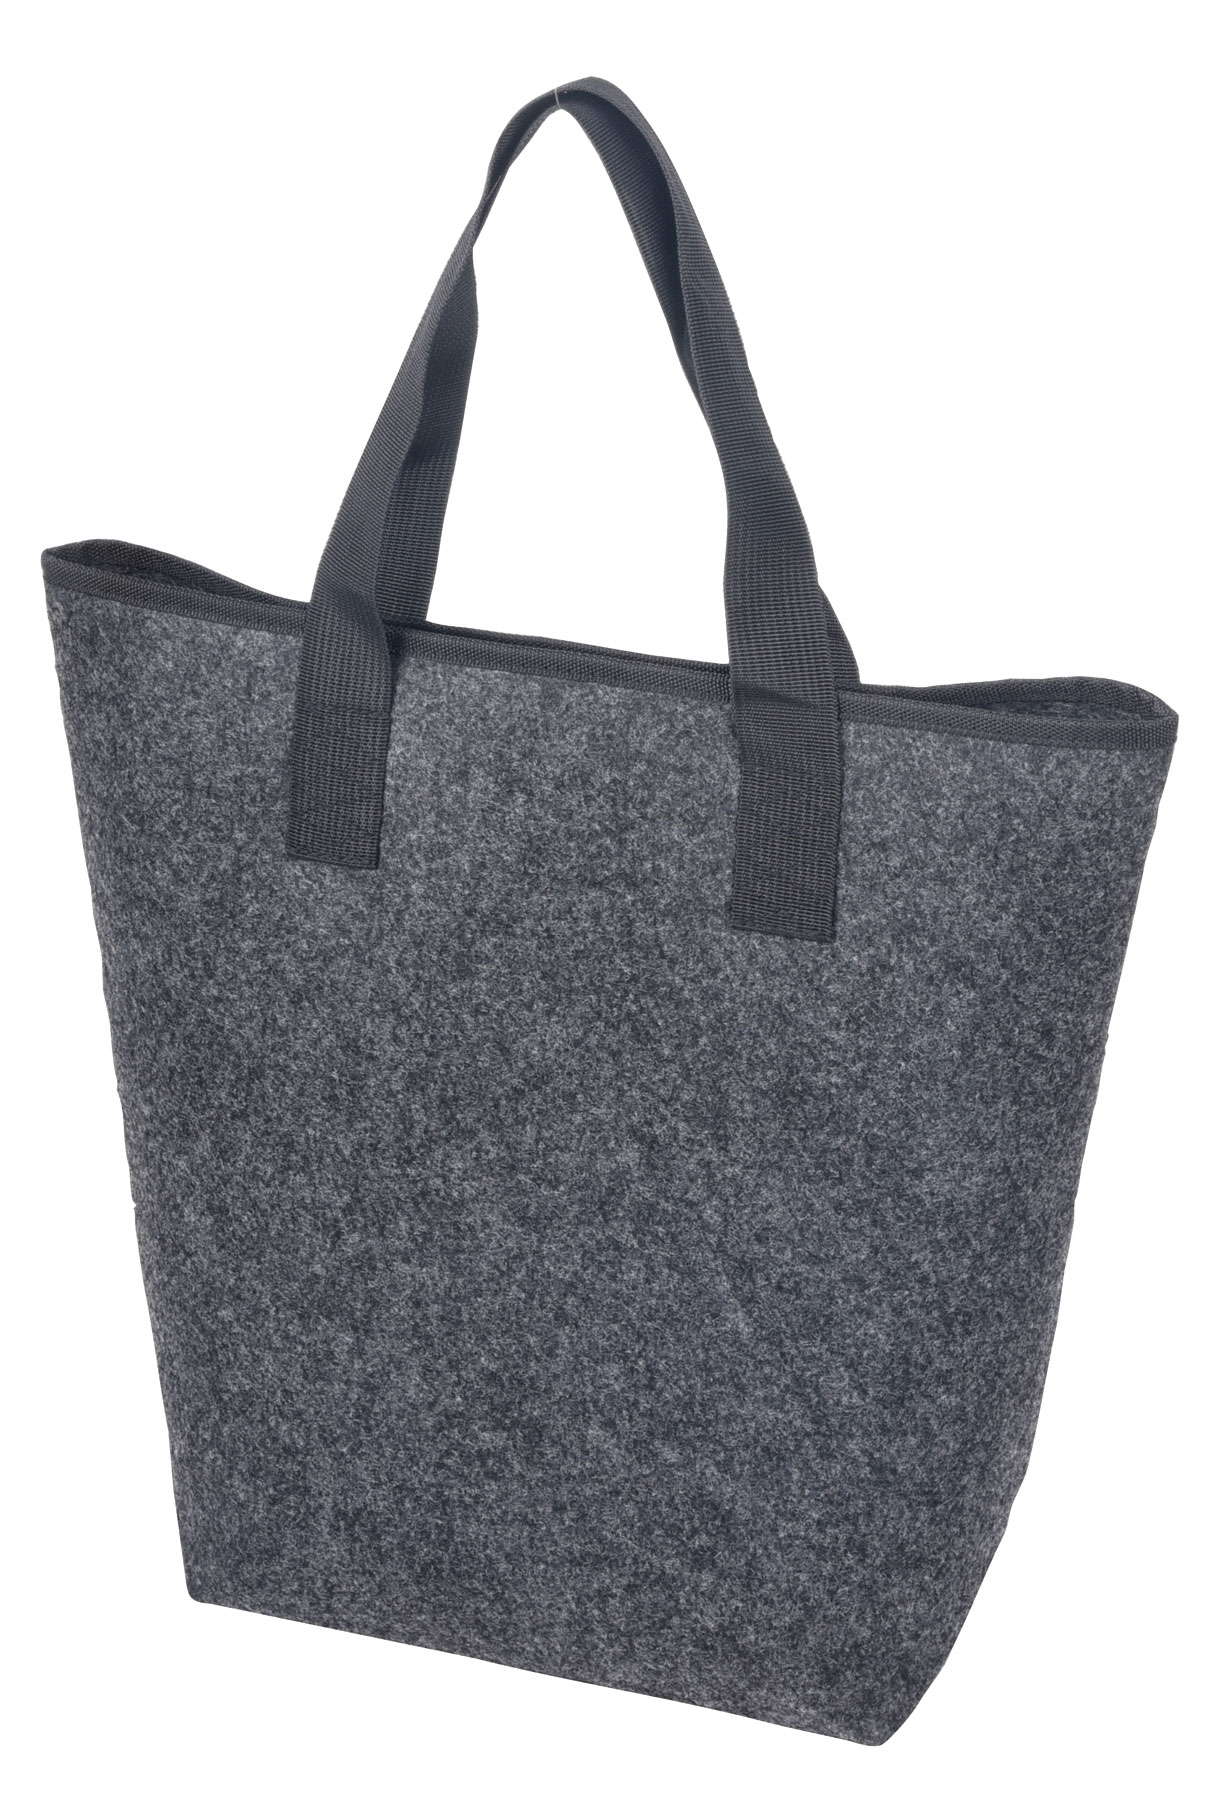 Shopper KATE made of felt - stone grey